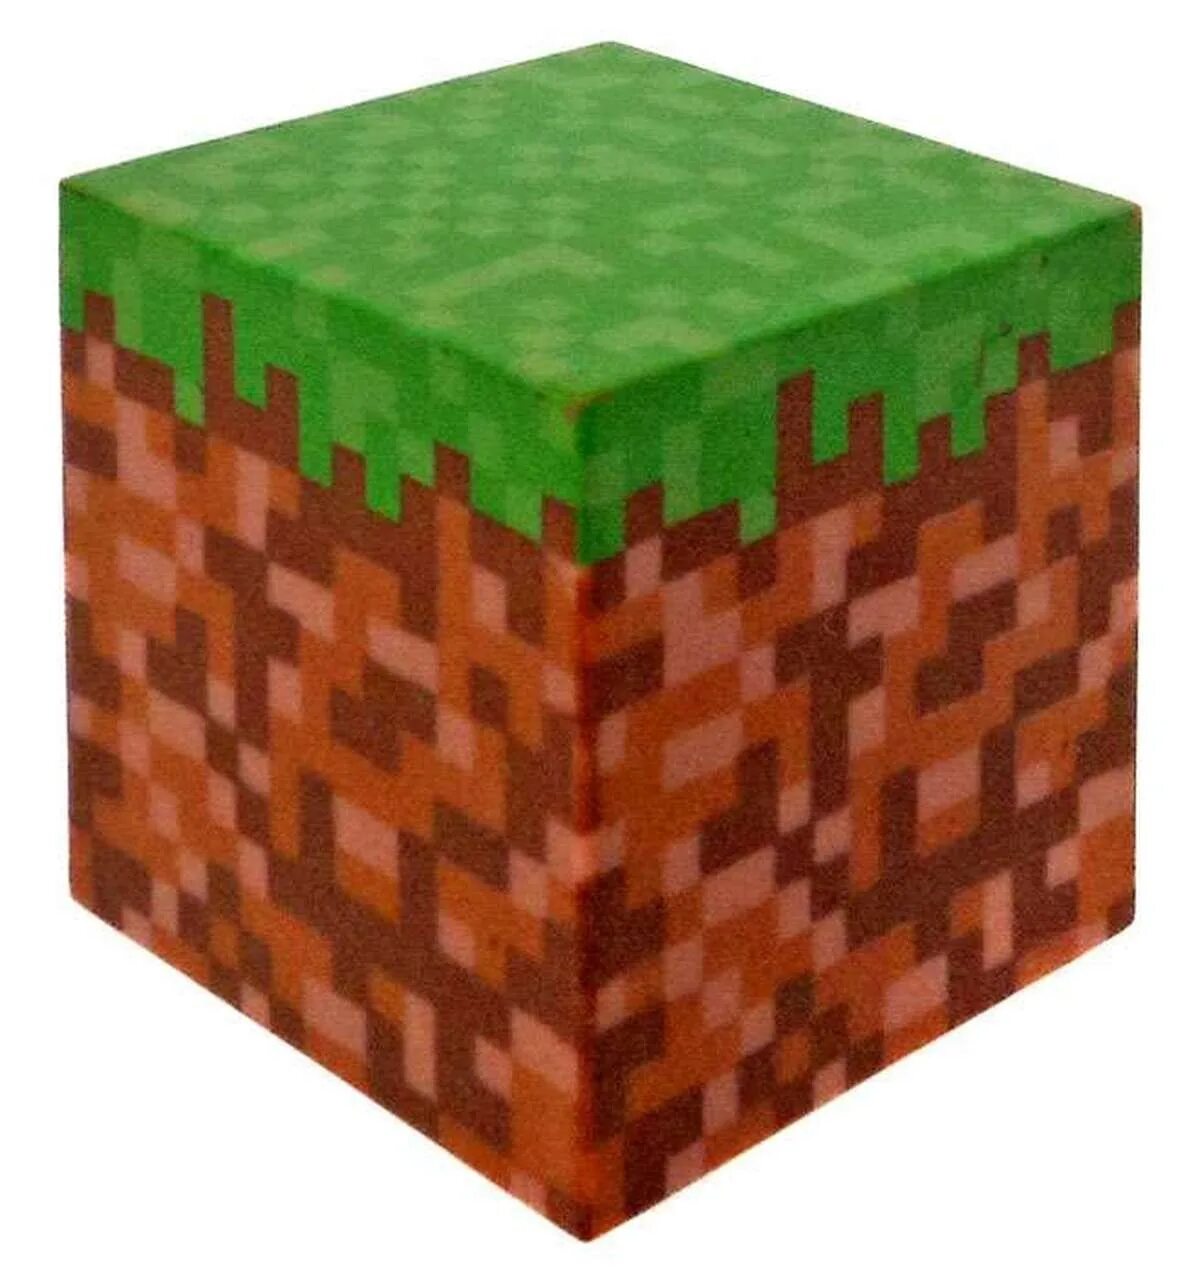 Minecraft blocks. Блок земли сбоку. Блок травы майнкрафт 1дс. Блок земли майнкрафт сбоку. Grass блок майнкрафт.